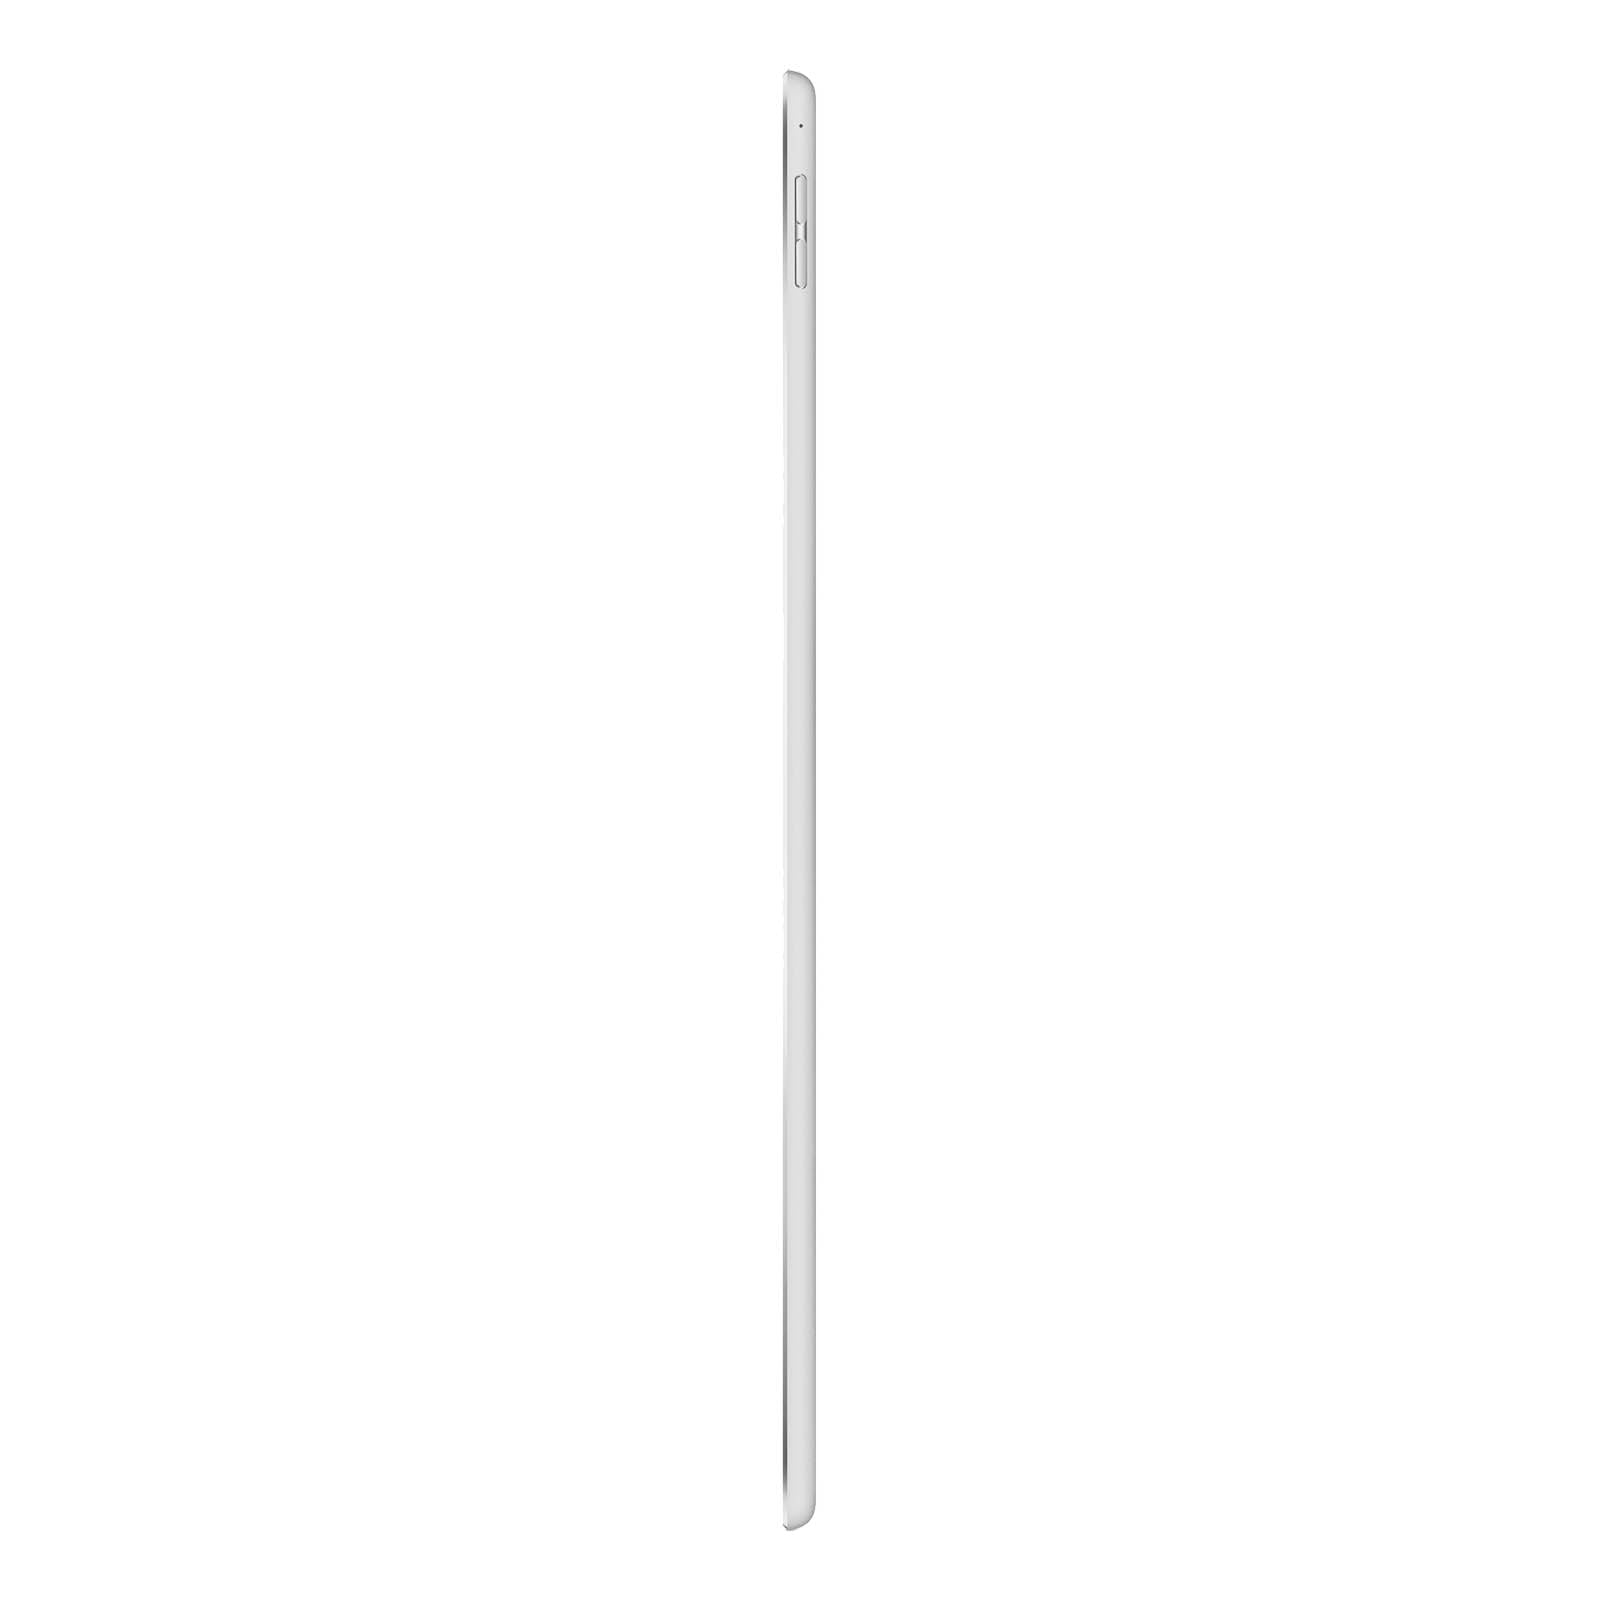 iPad Pro 12.9 Inch 1st Gen 256GB Silver Very Good - WiFi